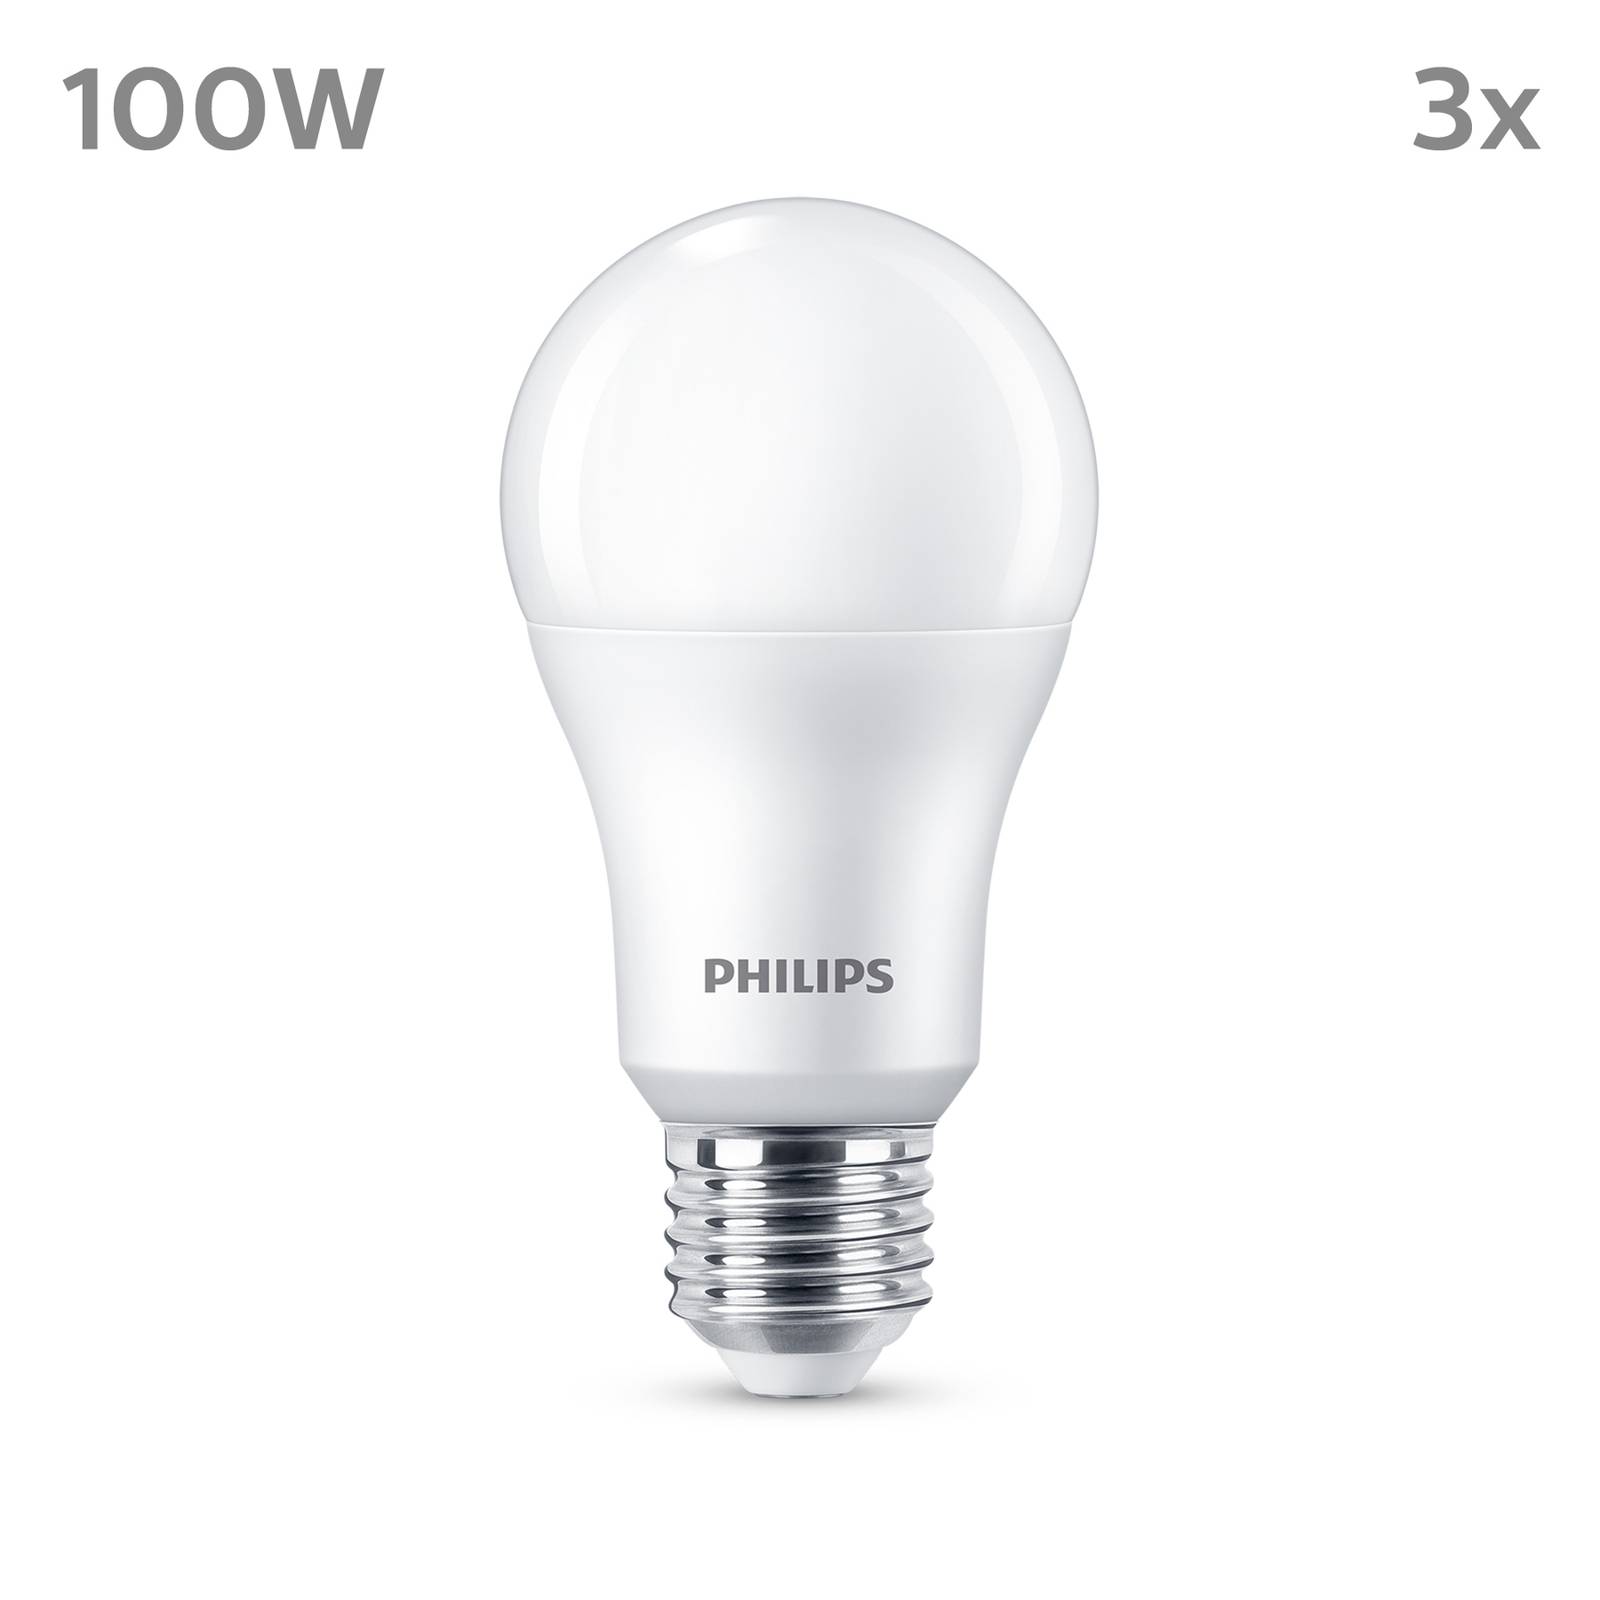 Philips Philips LED žárovka E27 13W 1521lm 4000K matná 3ks